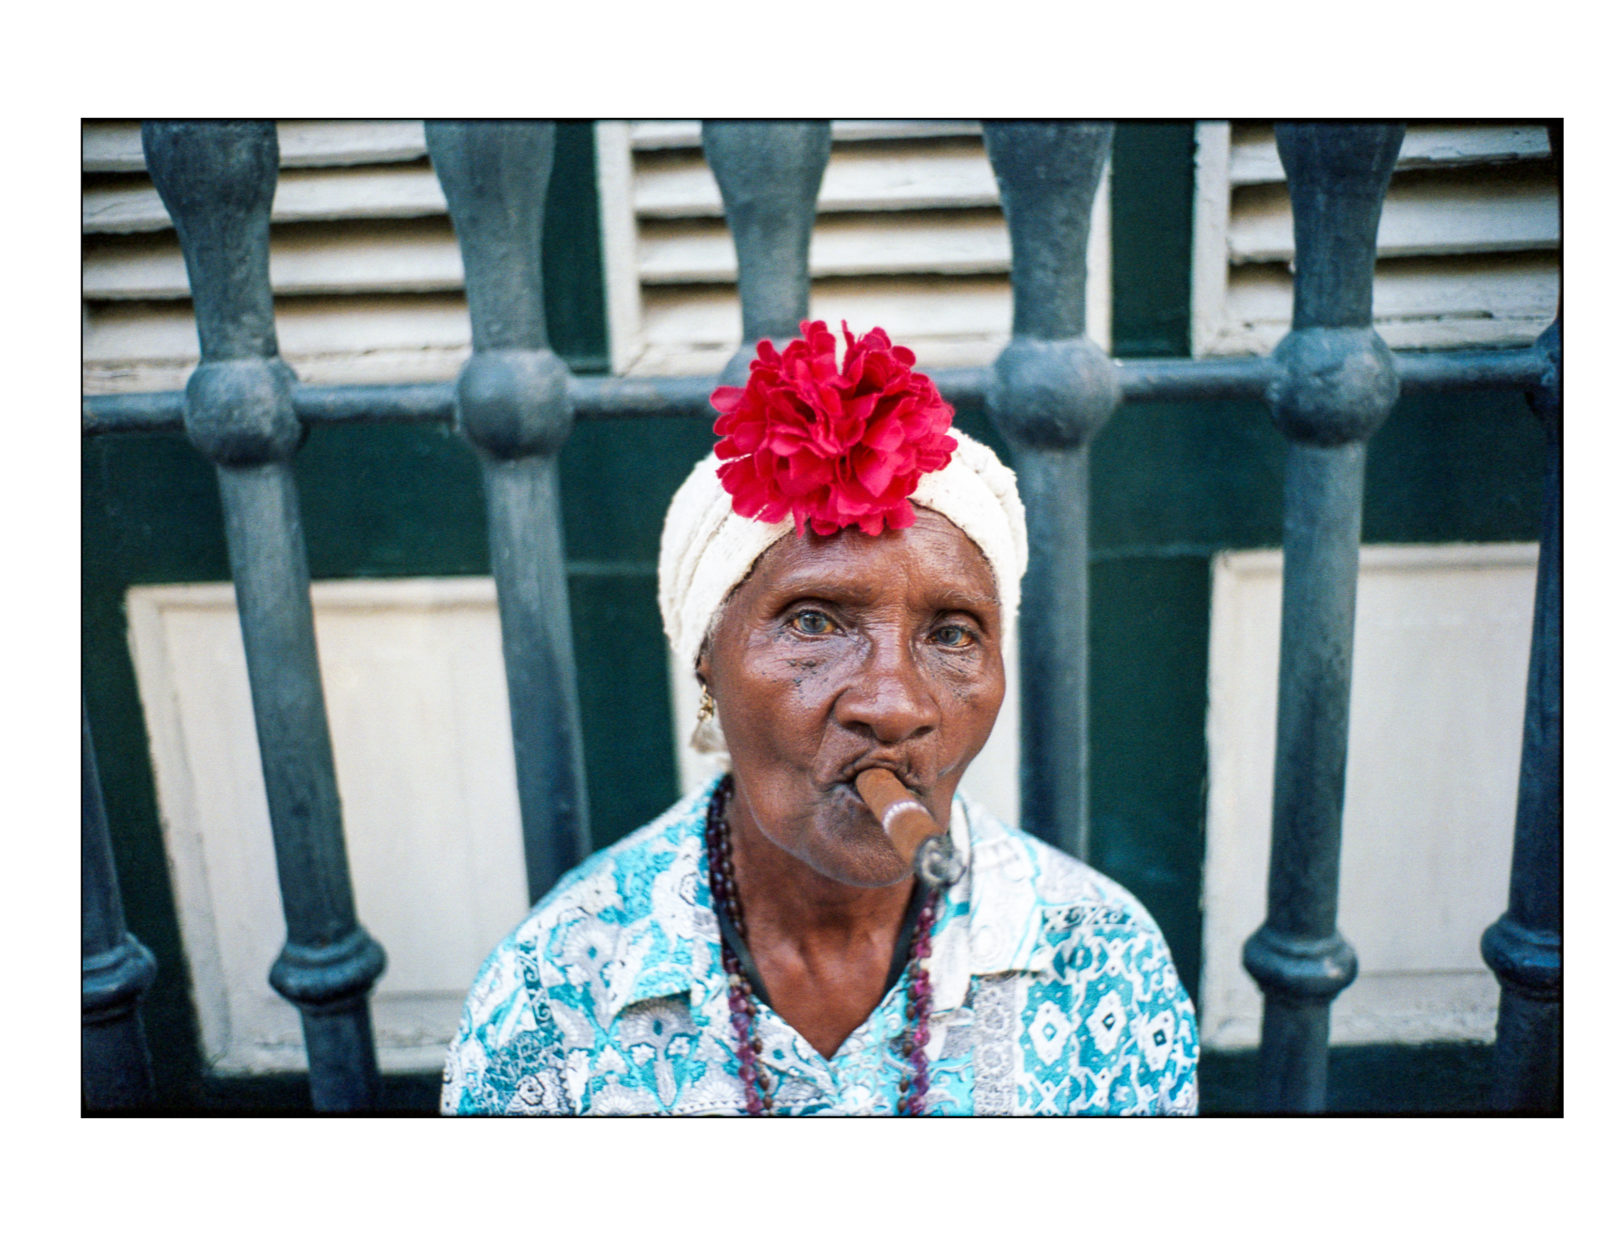 Nestor Photo of cuban woman